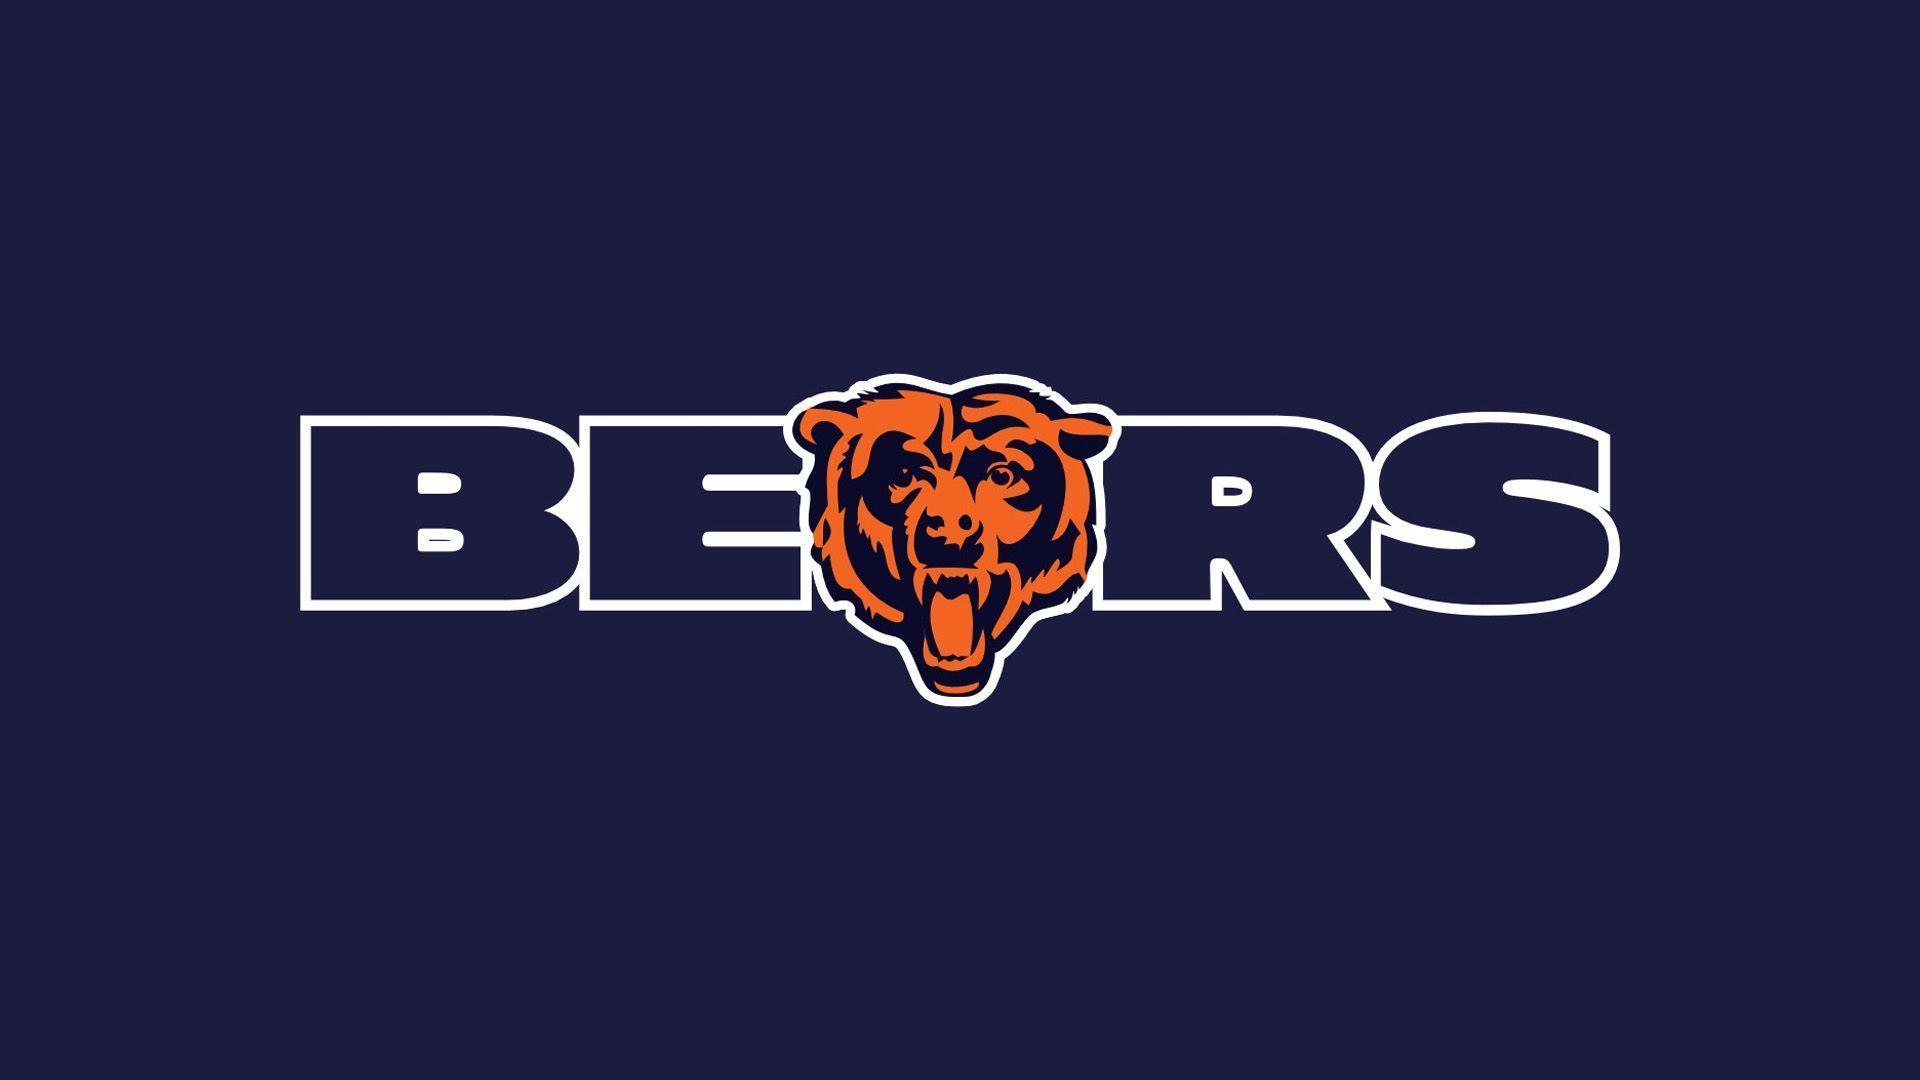 Chicago Bears High Resolution Wallpaper 24256 Image